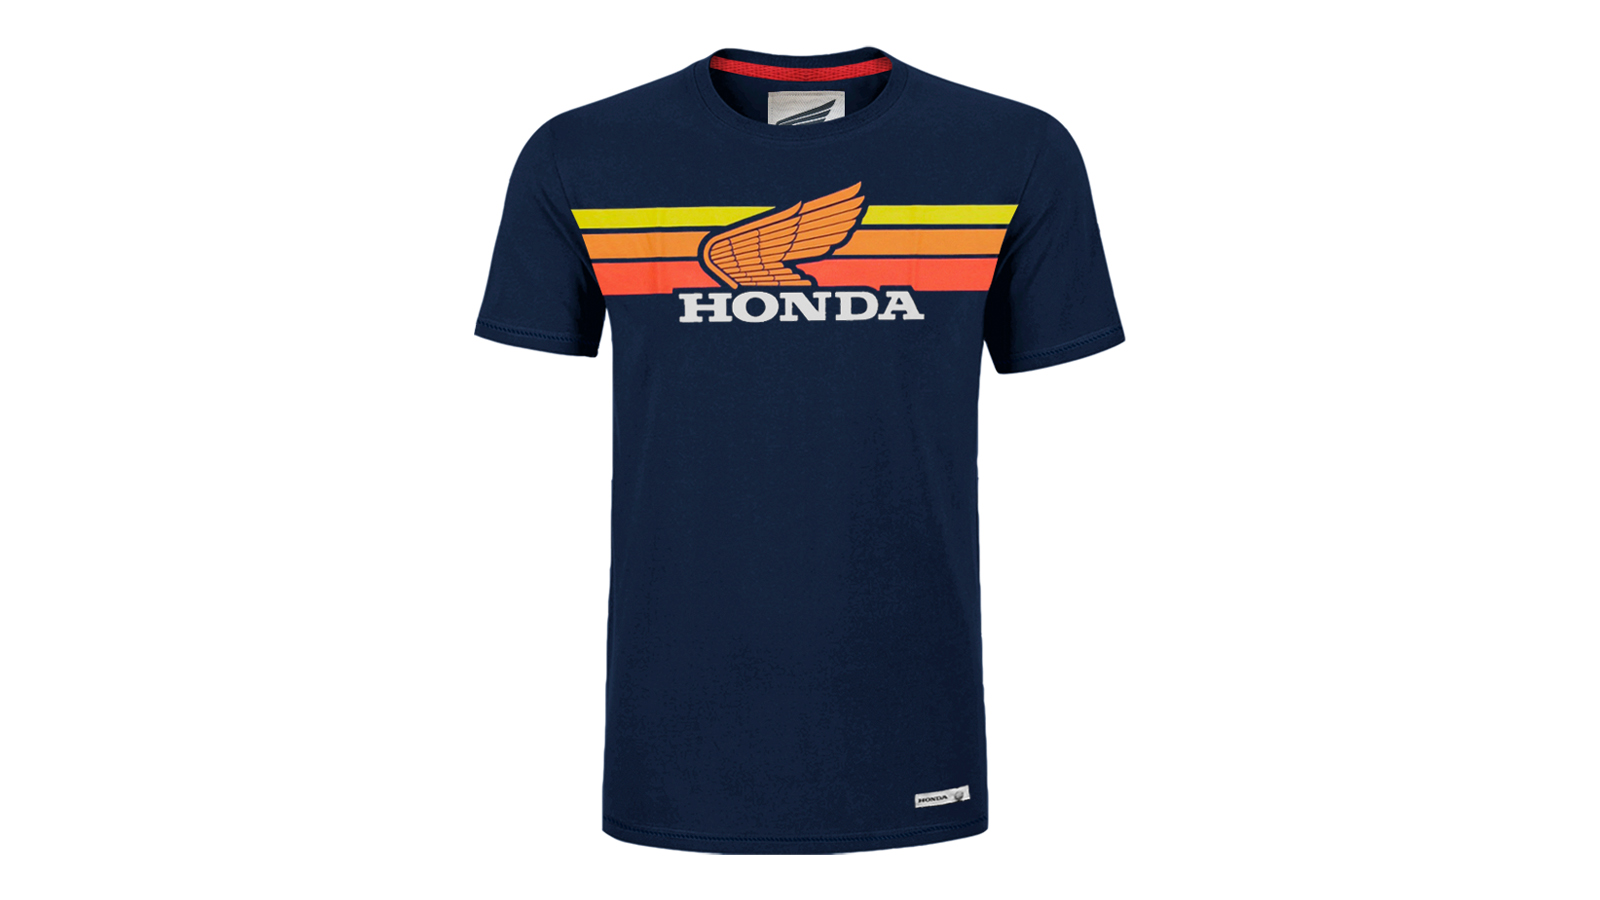 Honda Leisurewear image.